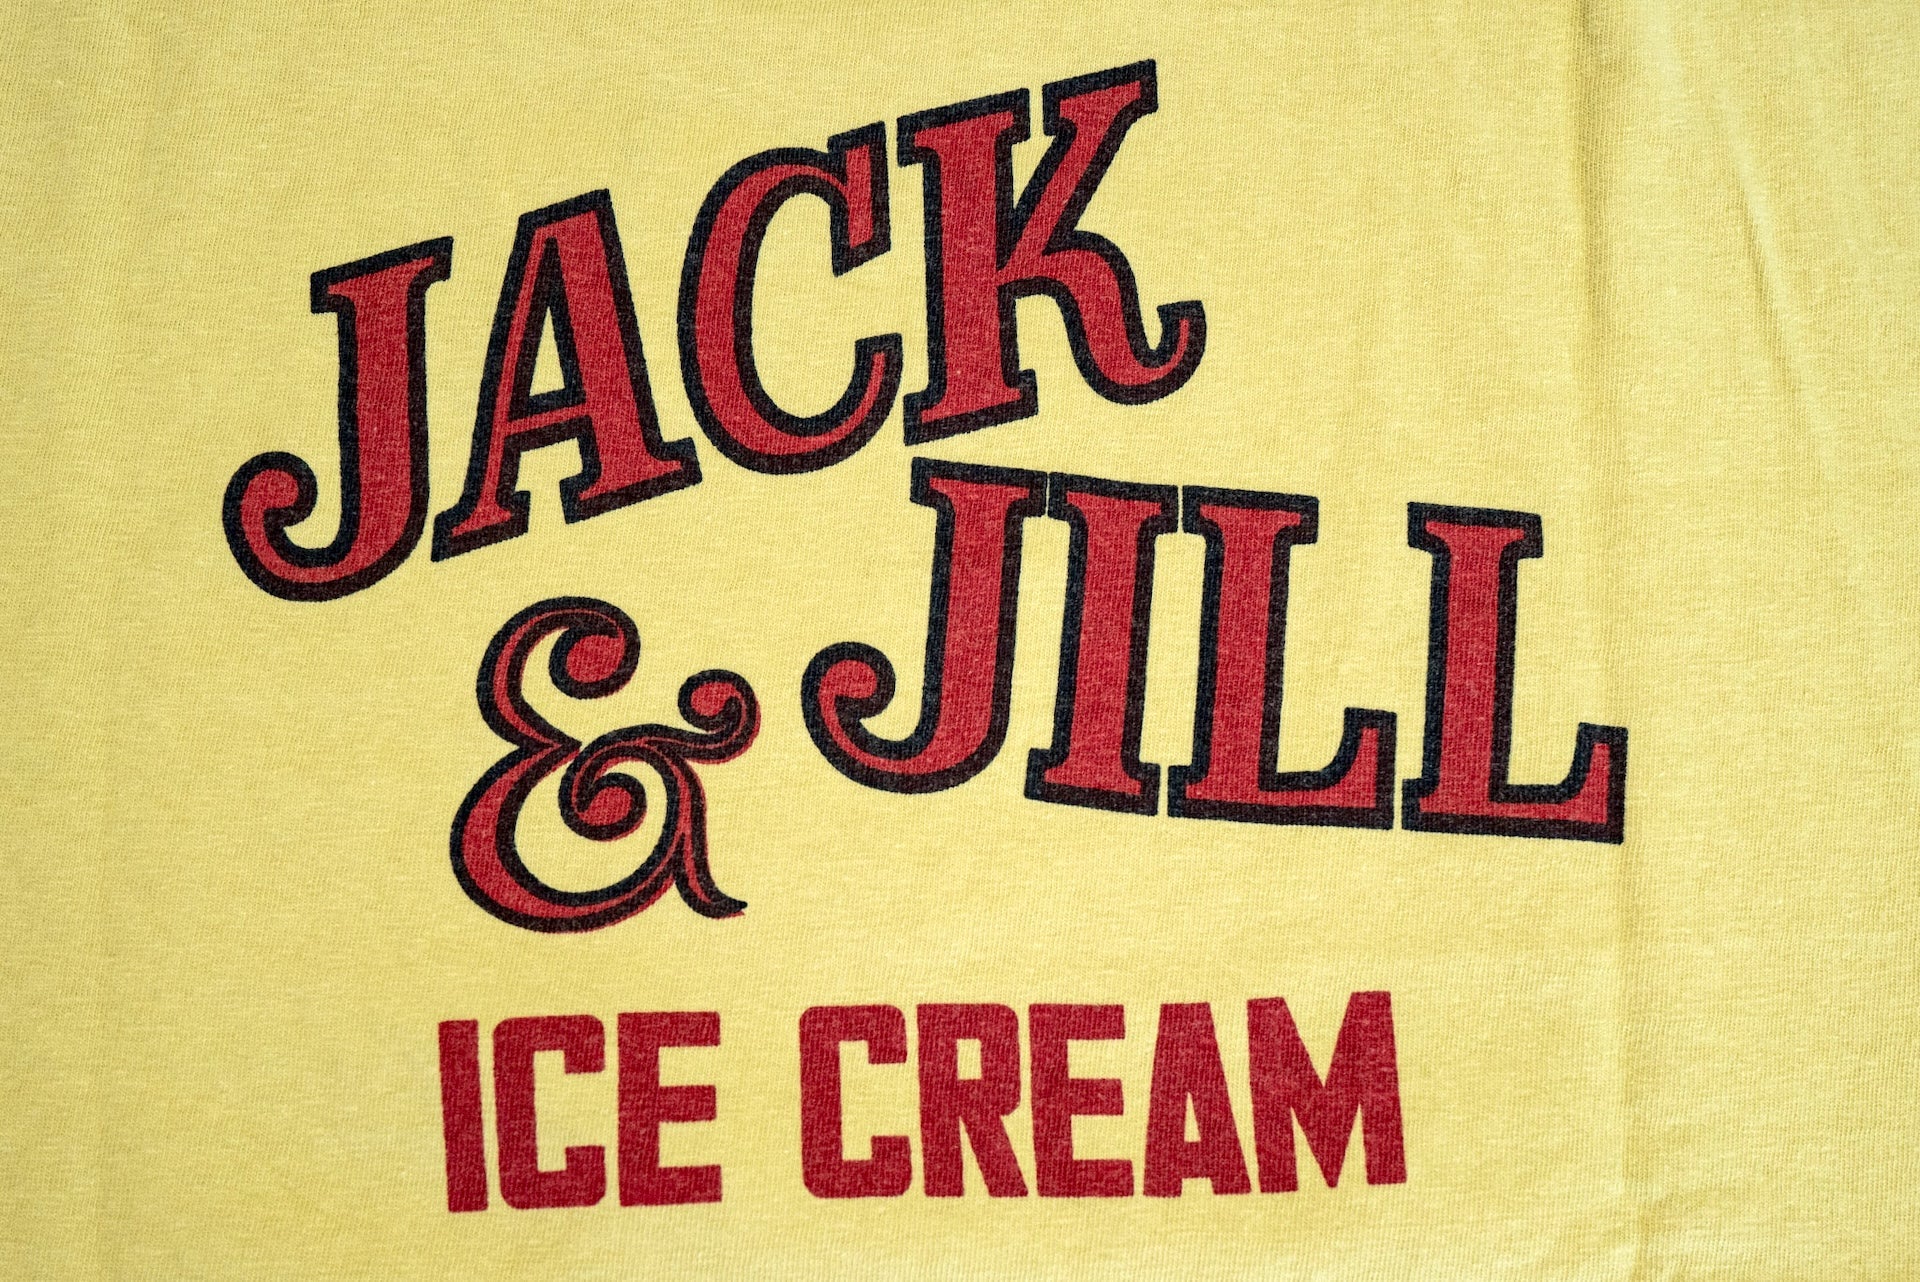 Warehouse 5oz "Jack & Jill" Tubular Tee (Cream Yellow)